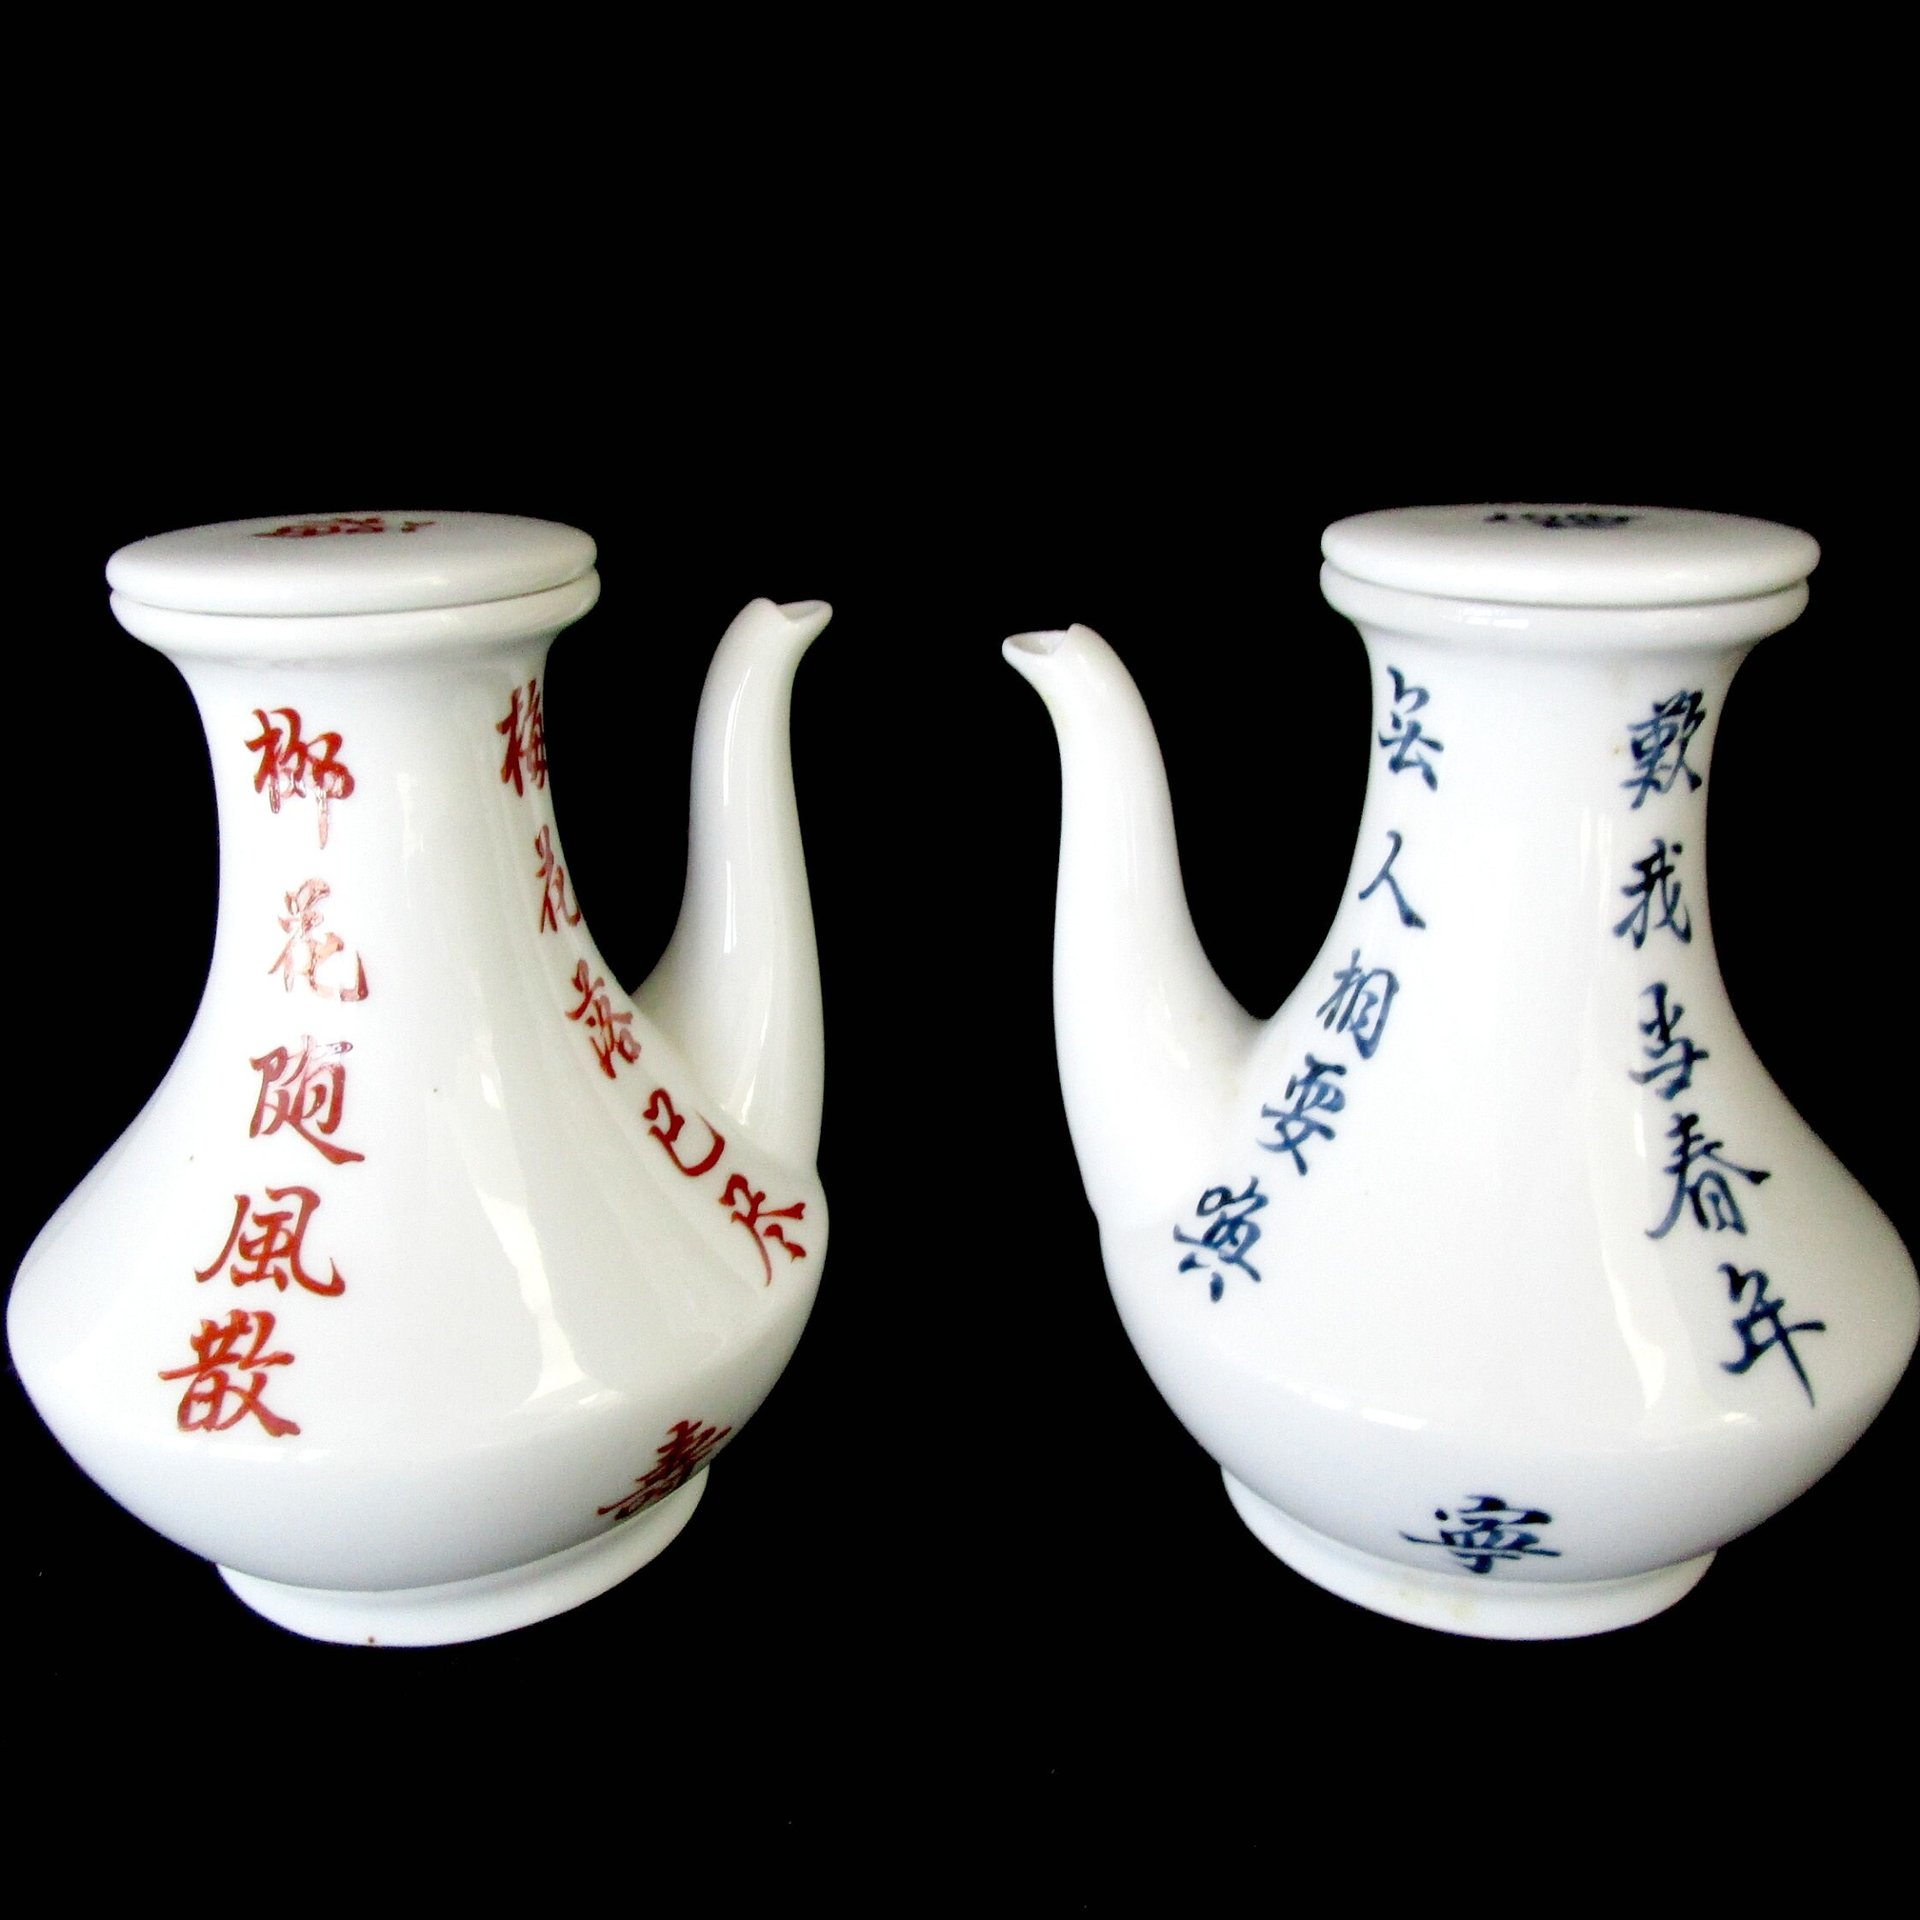 Set of 2, Asian Teapots, Lidded Teapots, Made in Hong Kong, Asian Kitchen Decor, Gift for Tea Lovers, Make Offer